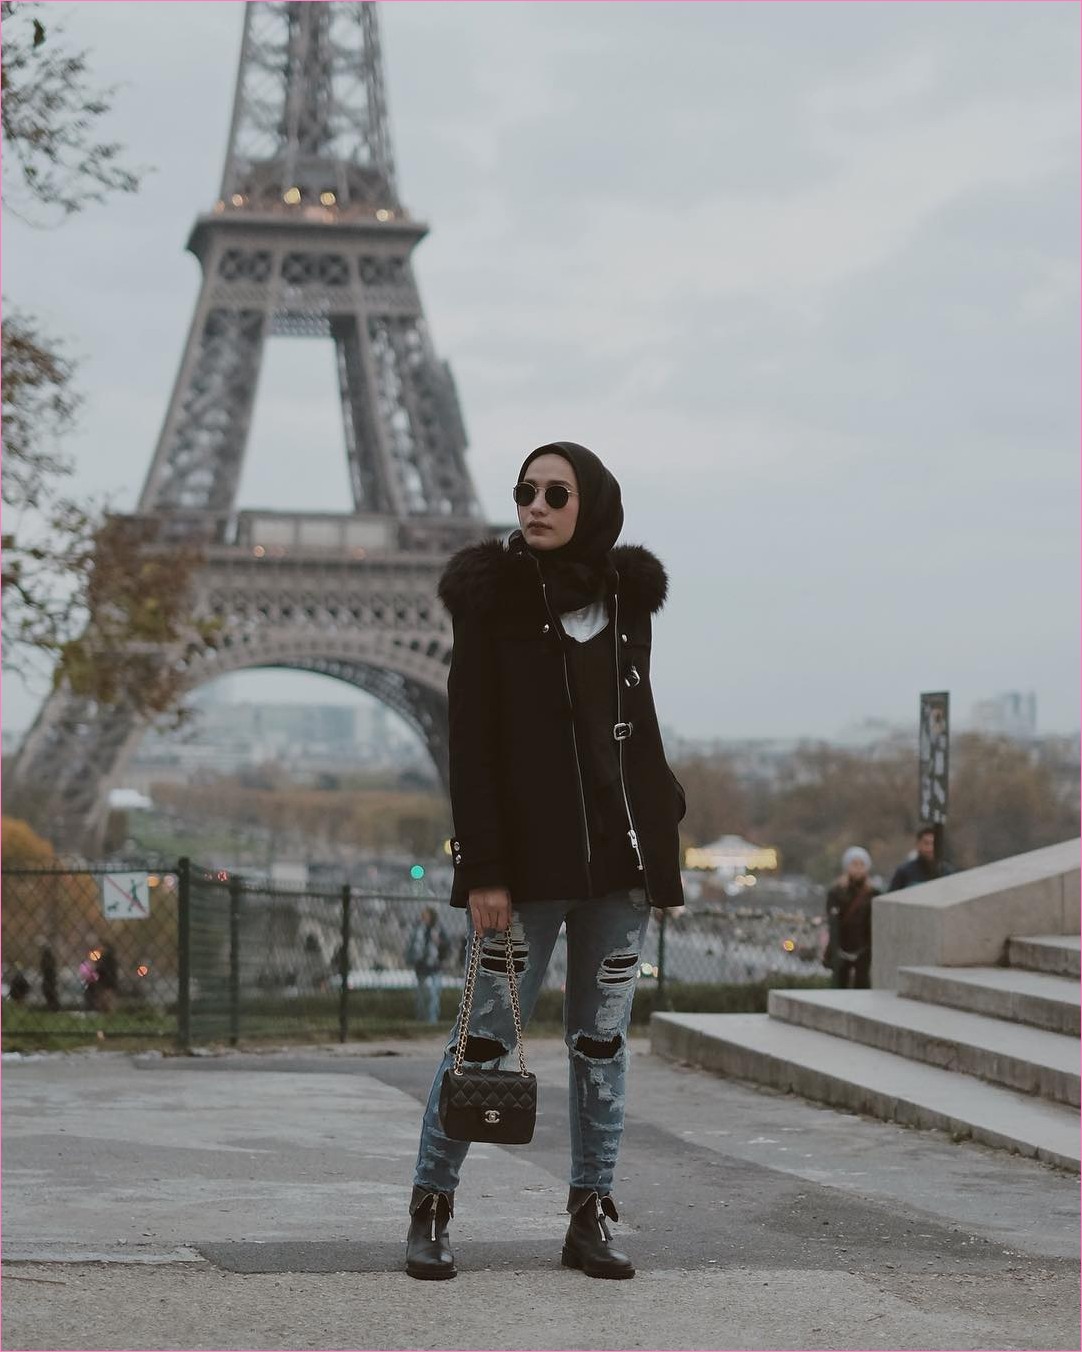  Kalian ingin jalan jalan ke luar negeri  33 Model Outfit Baju Traveler Berhijab untuk Keluar Negri Para Selebgram 2018